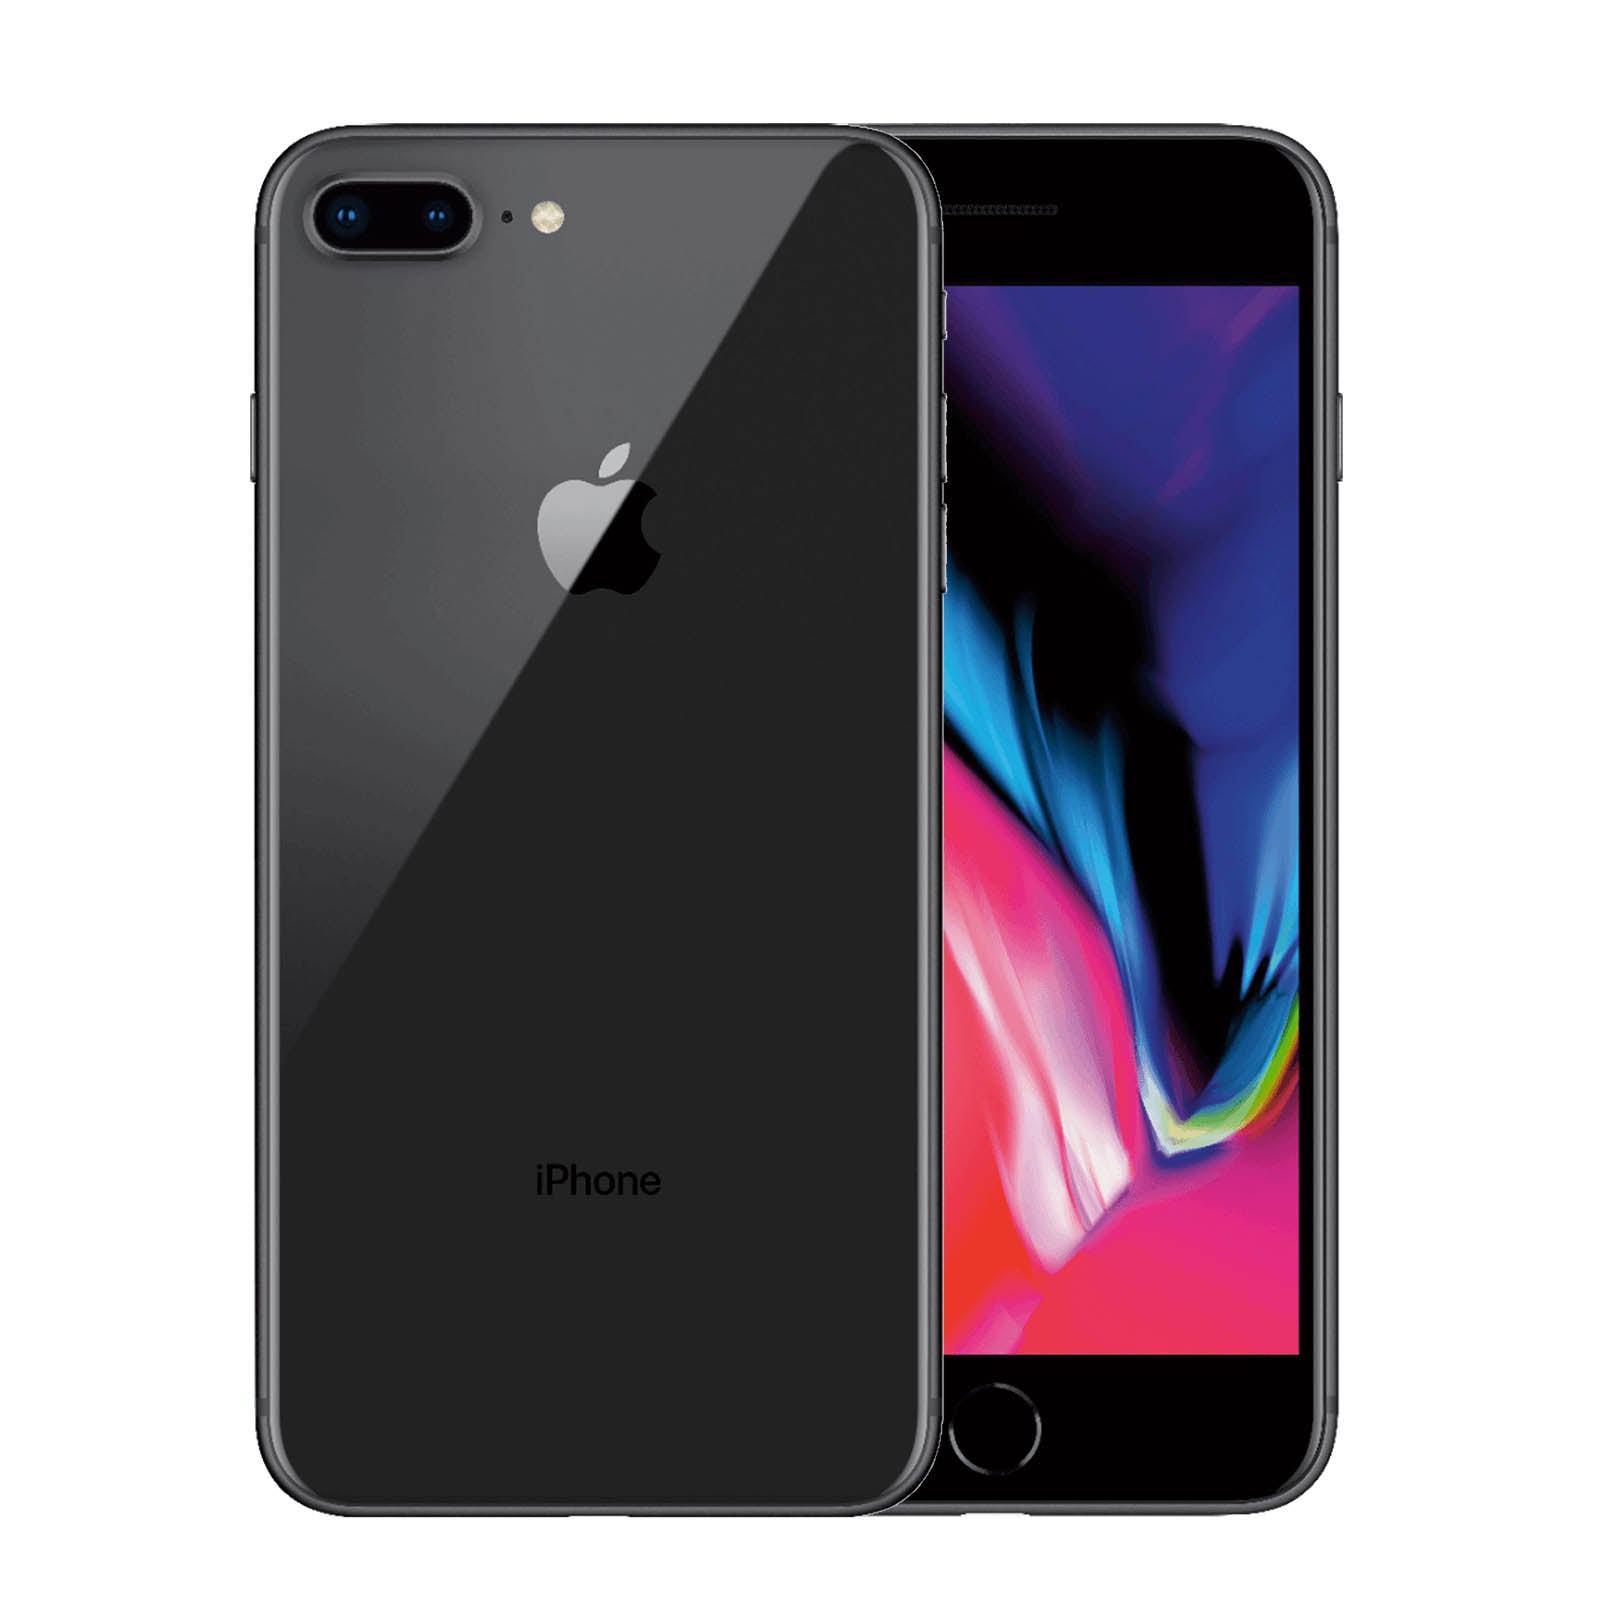 Apple iPhone 8 Plus 256GB Space Grey Fair - Unlocked